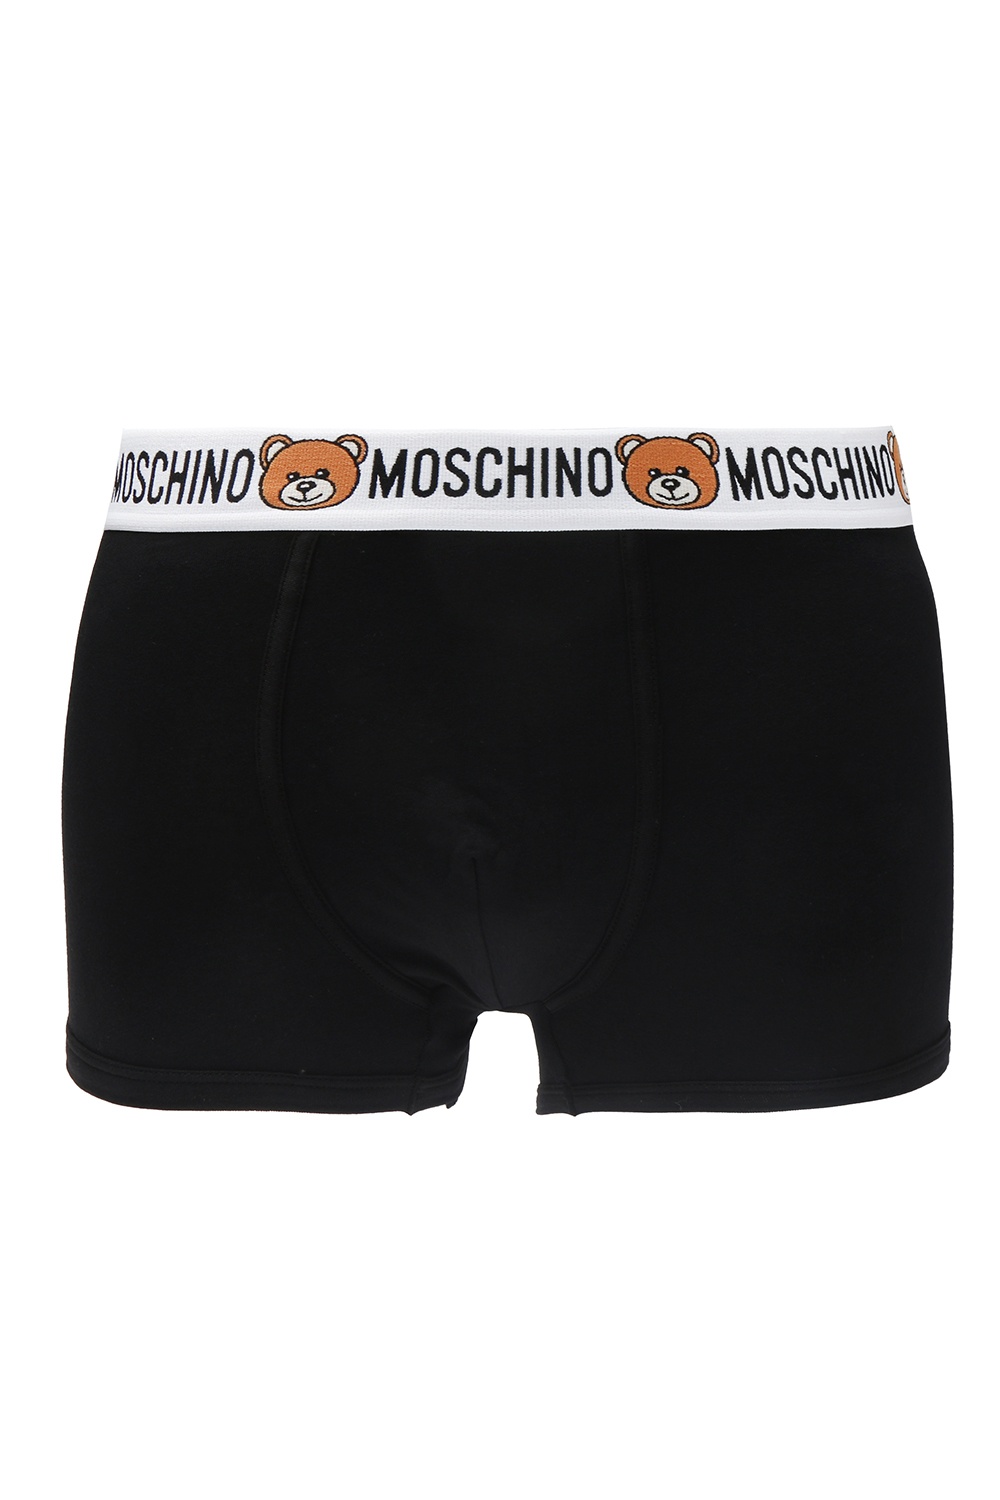 moschino bear boxers